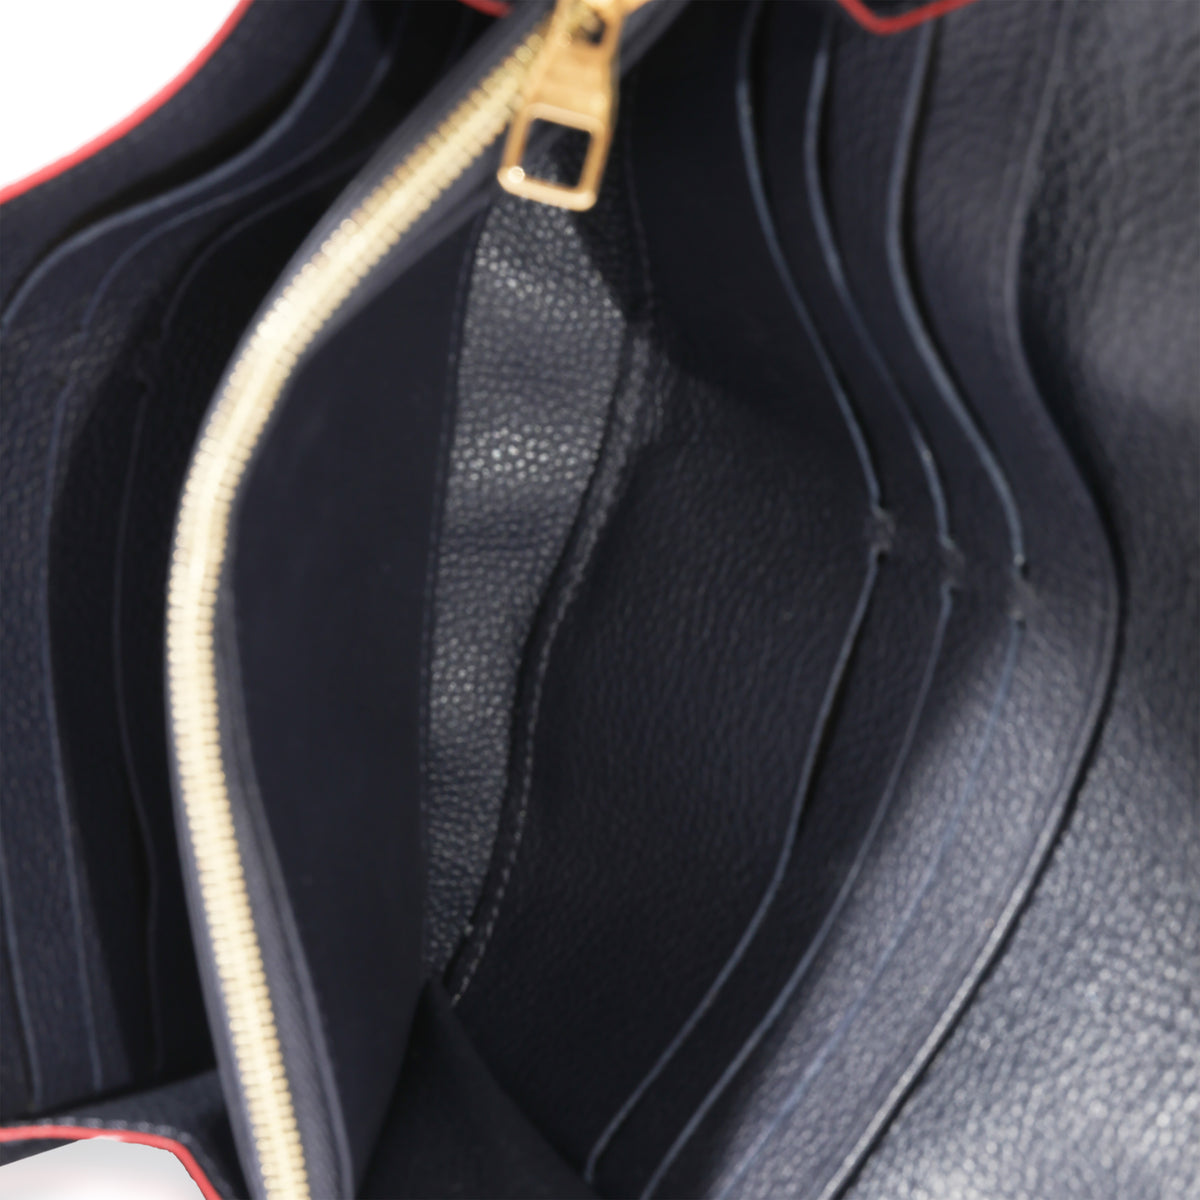 Louis Vuitton M62125 Marine/Rouge Empreinte Leather Sarah wallet